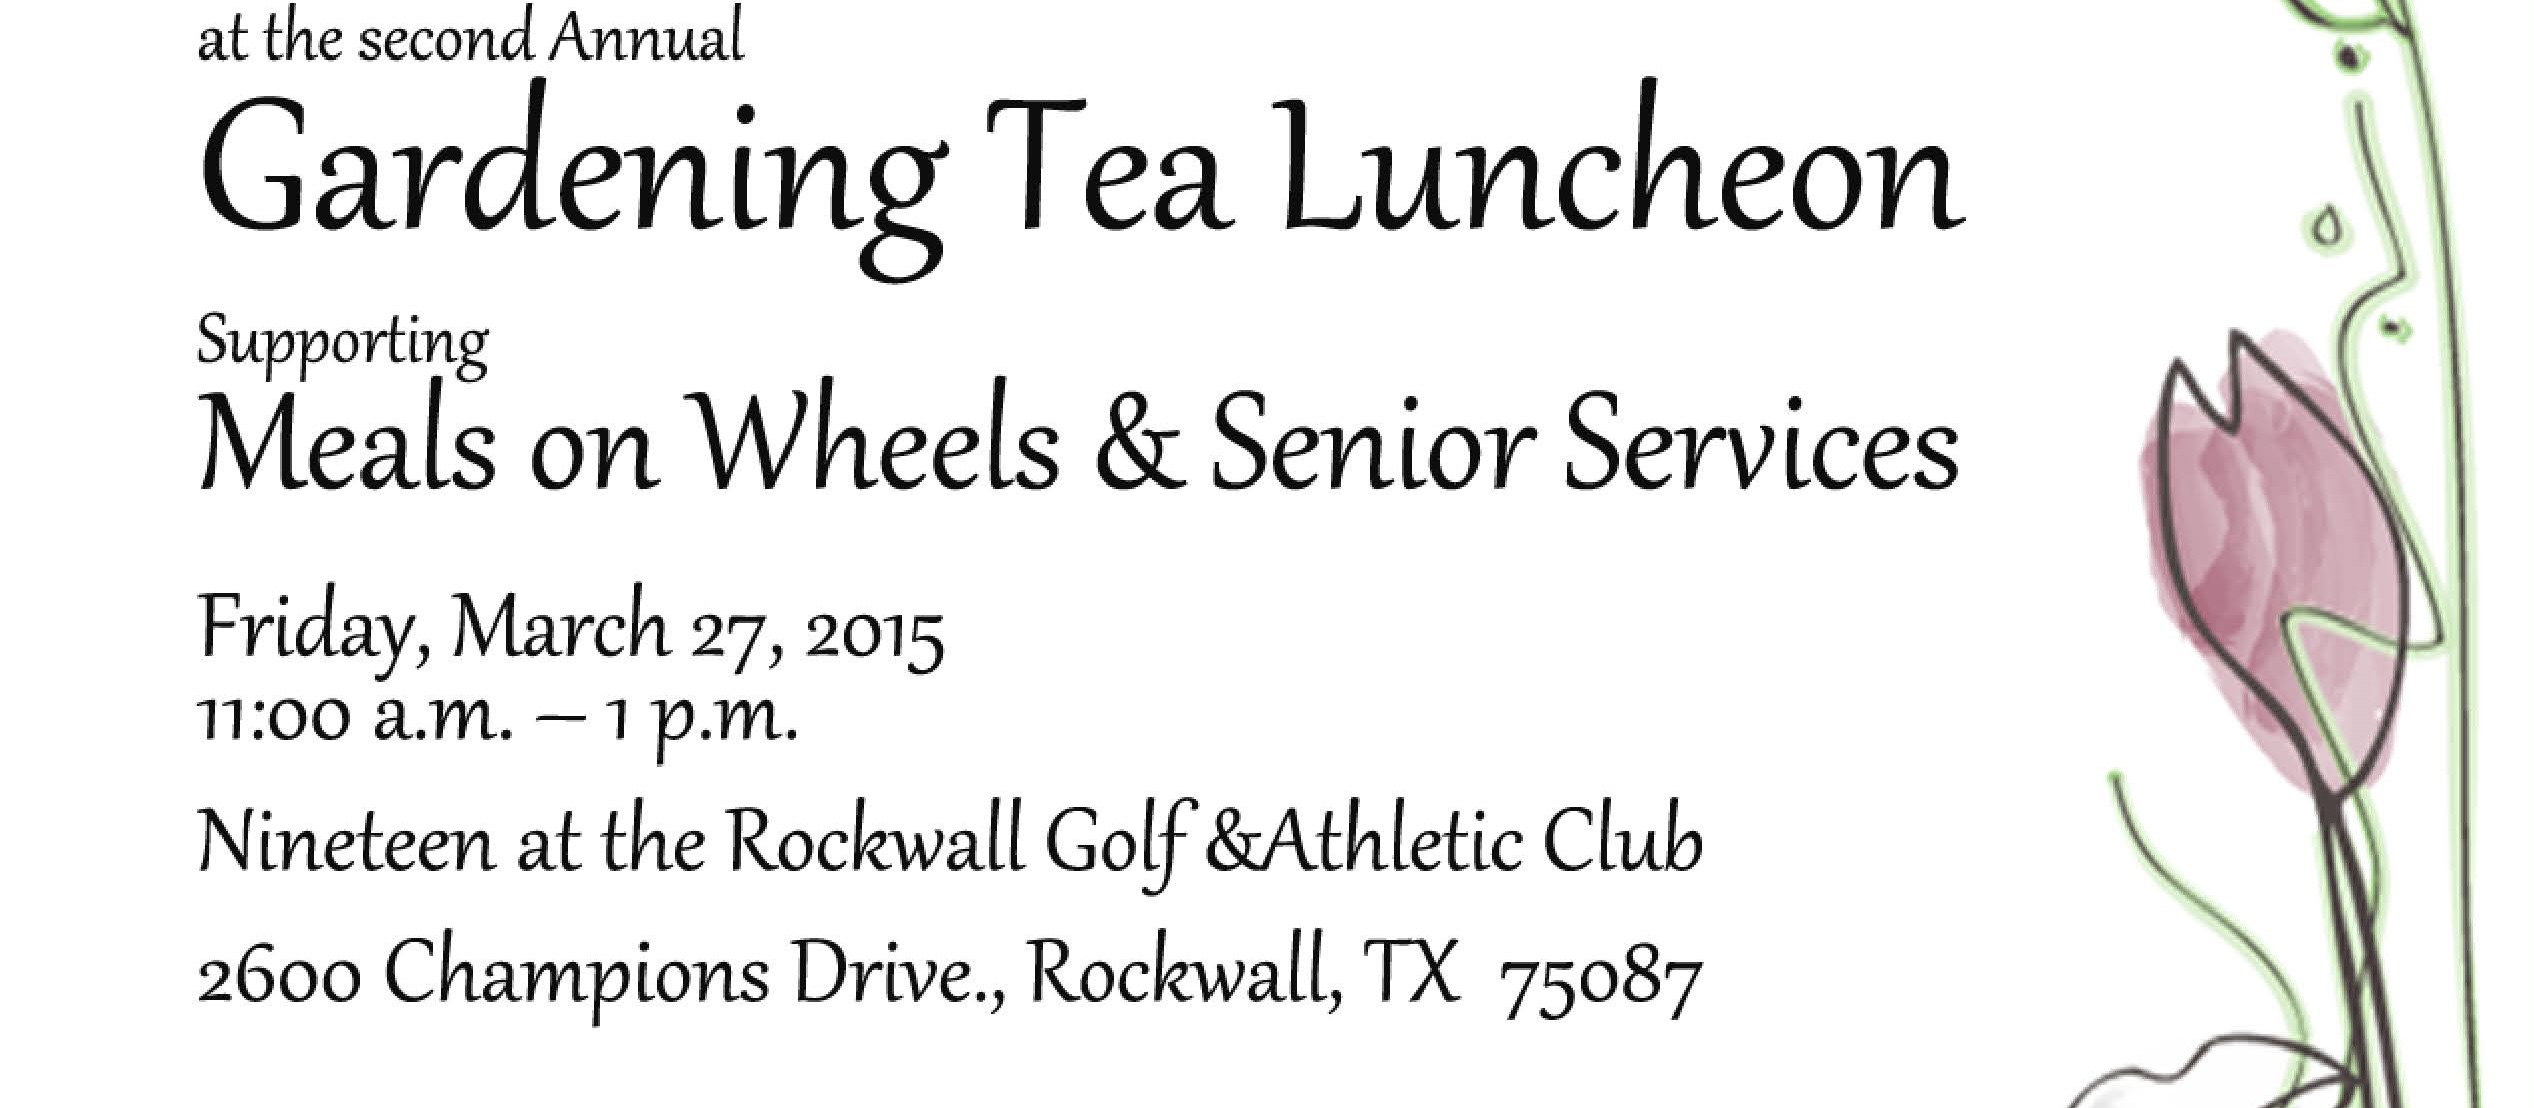 Gardening Tea Luncheon March 27 to benefit Meals on Wheels